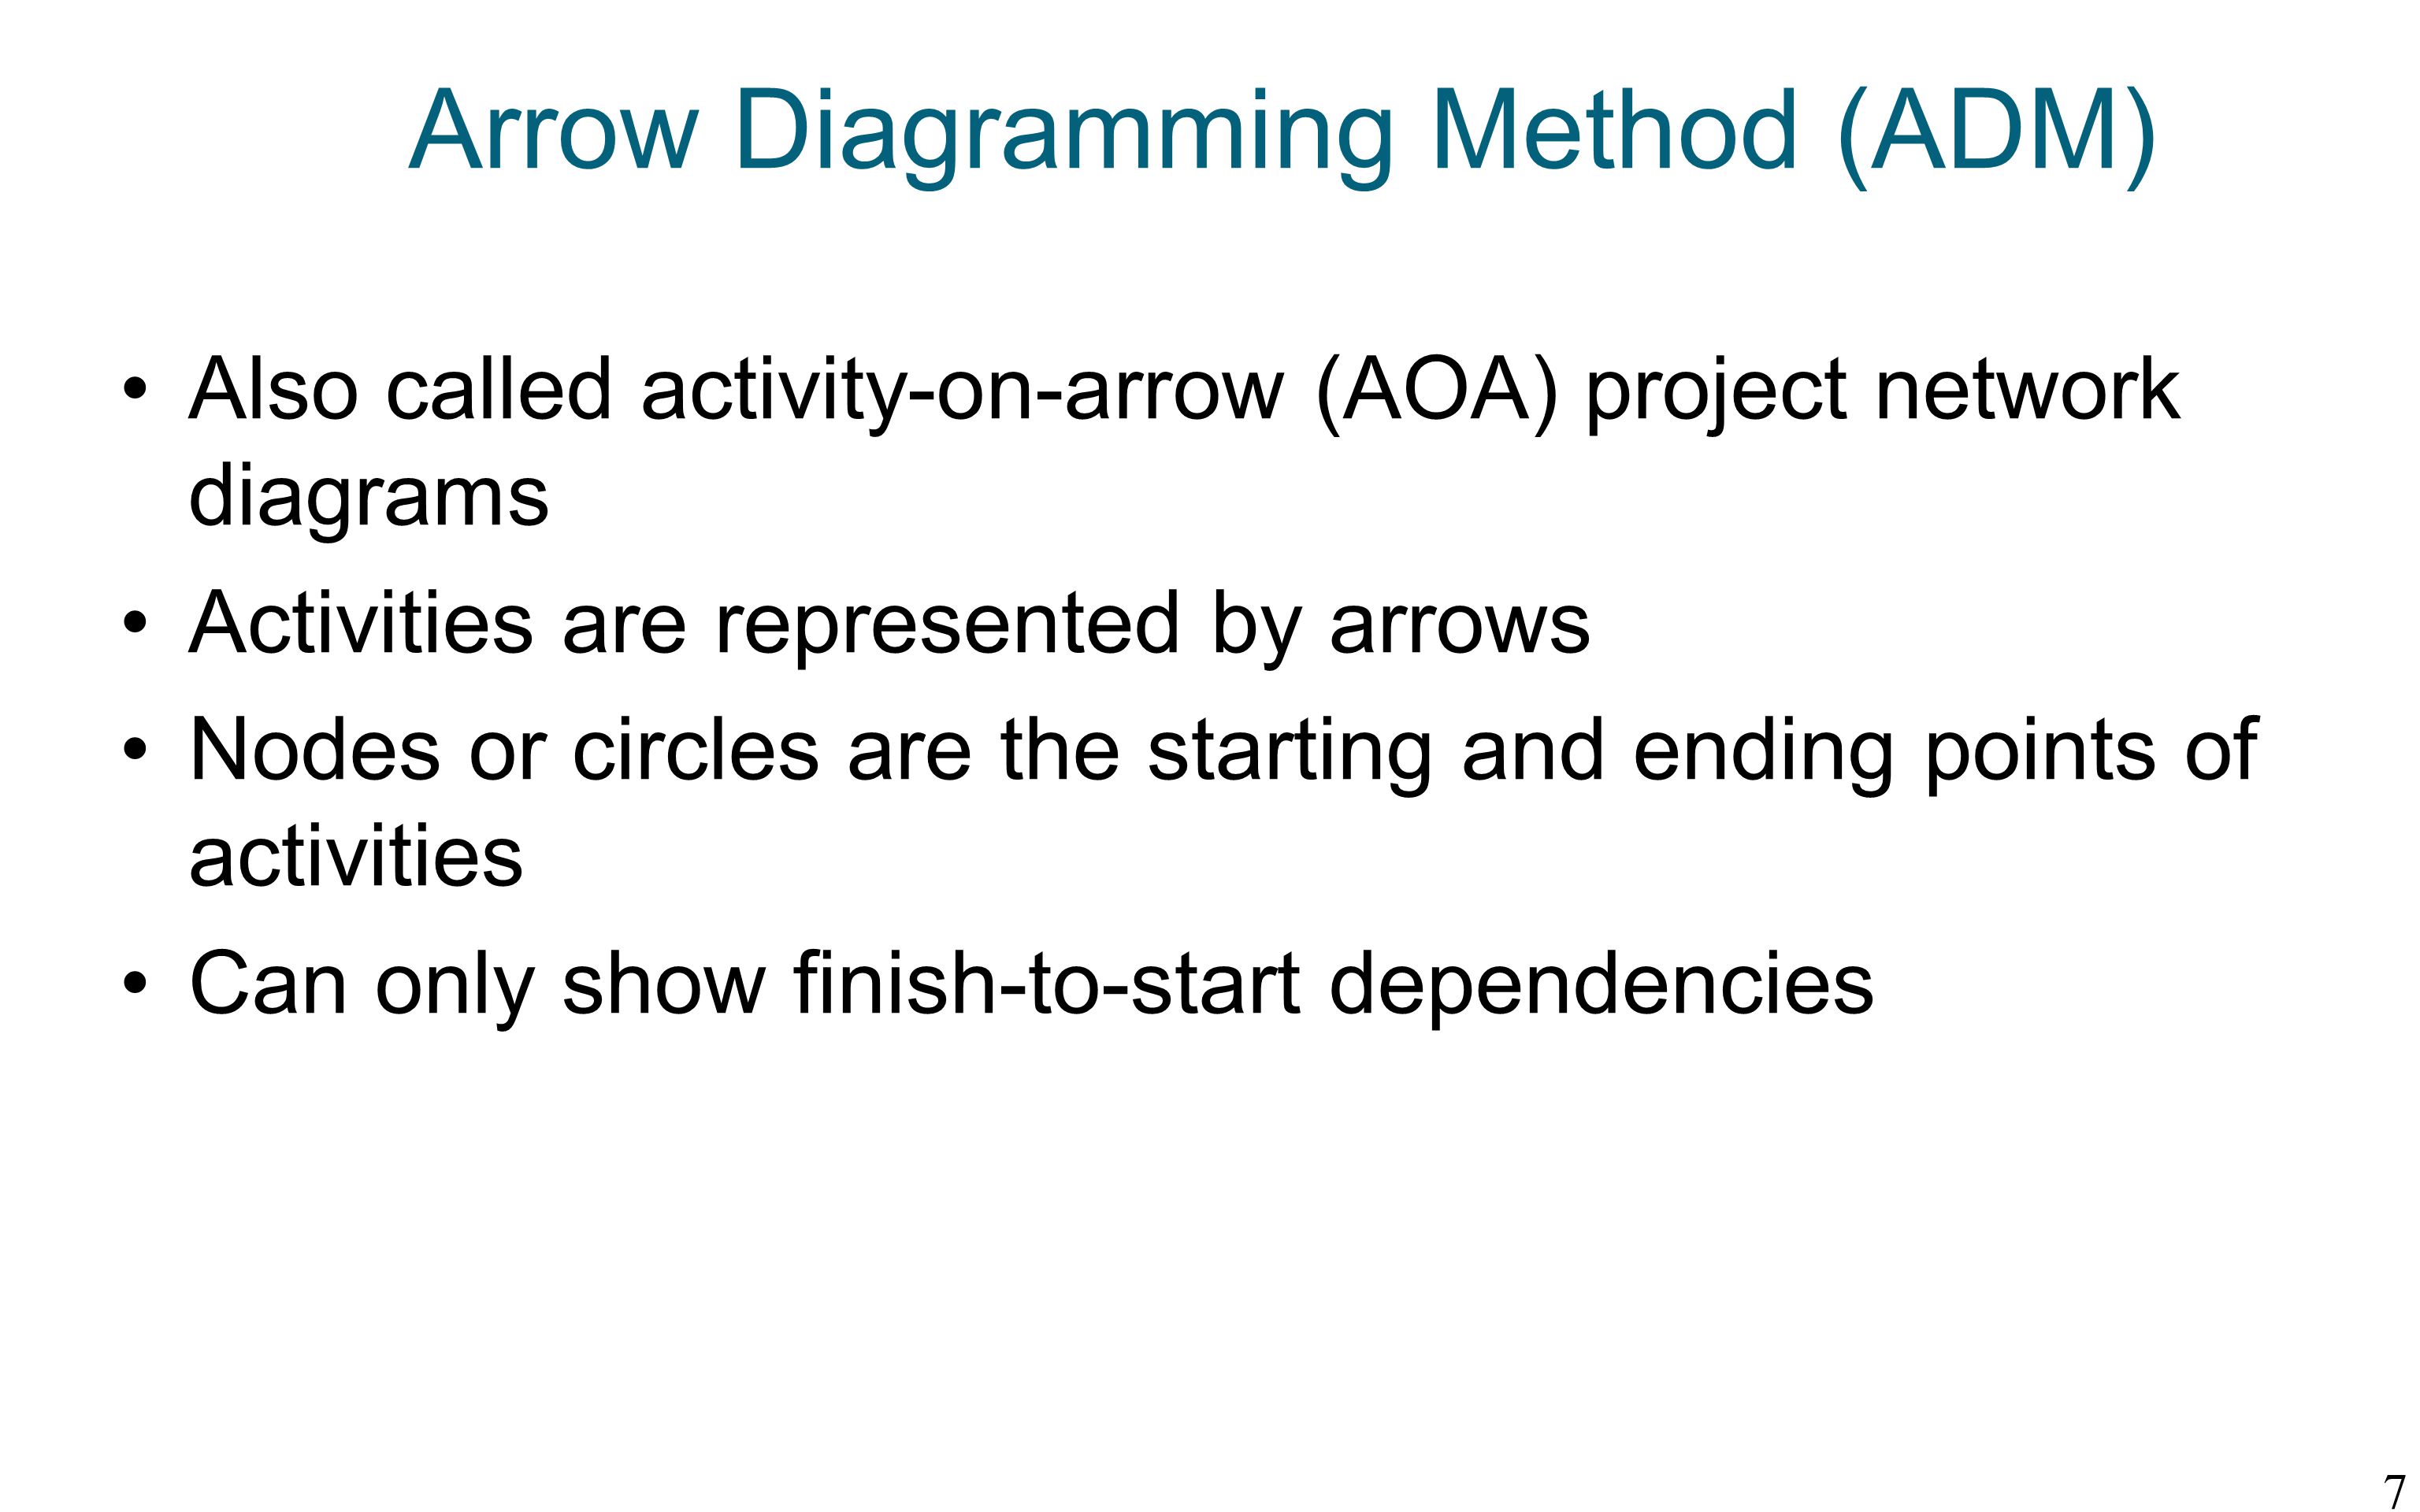 Arrow Diagramming Method (ADM)